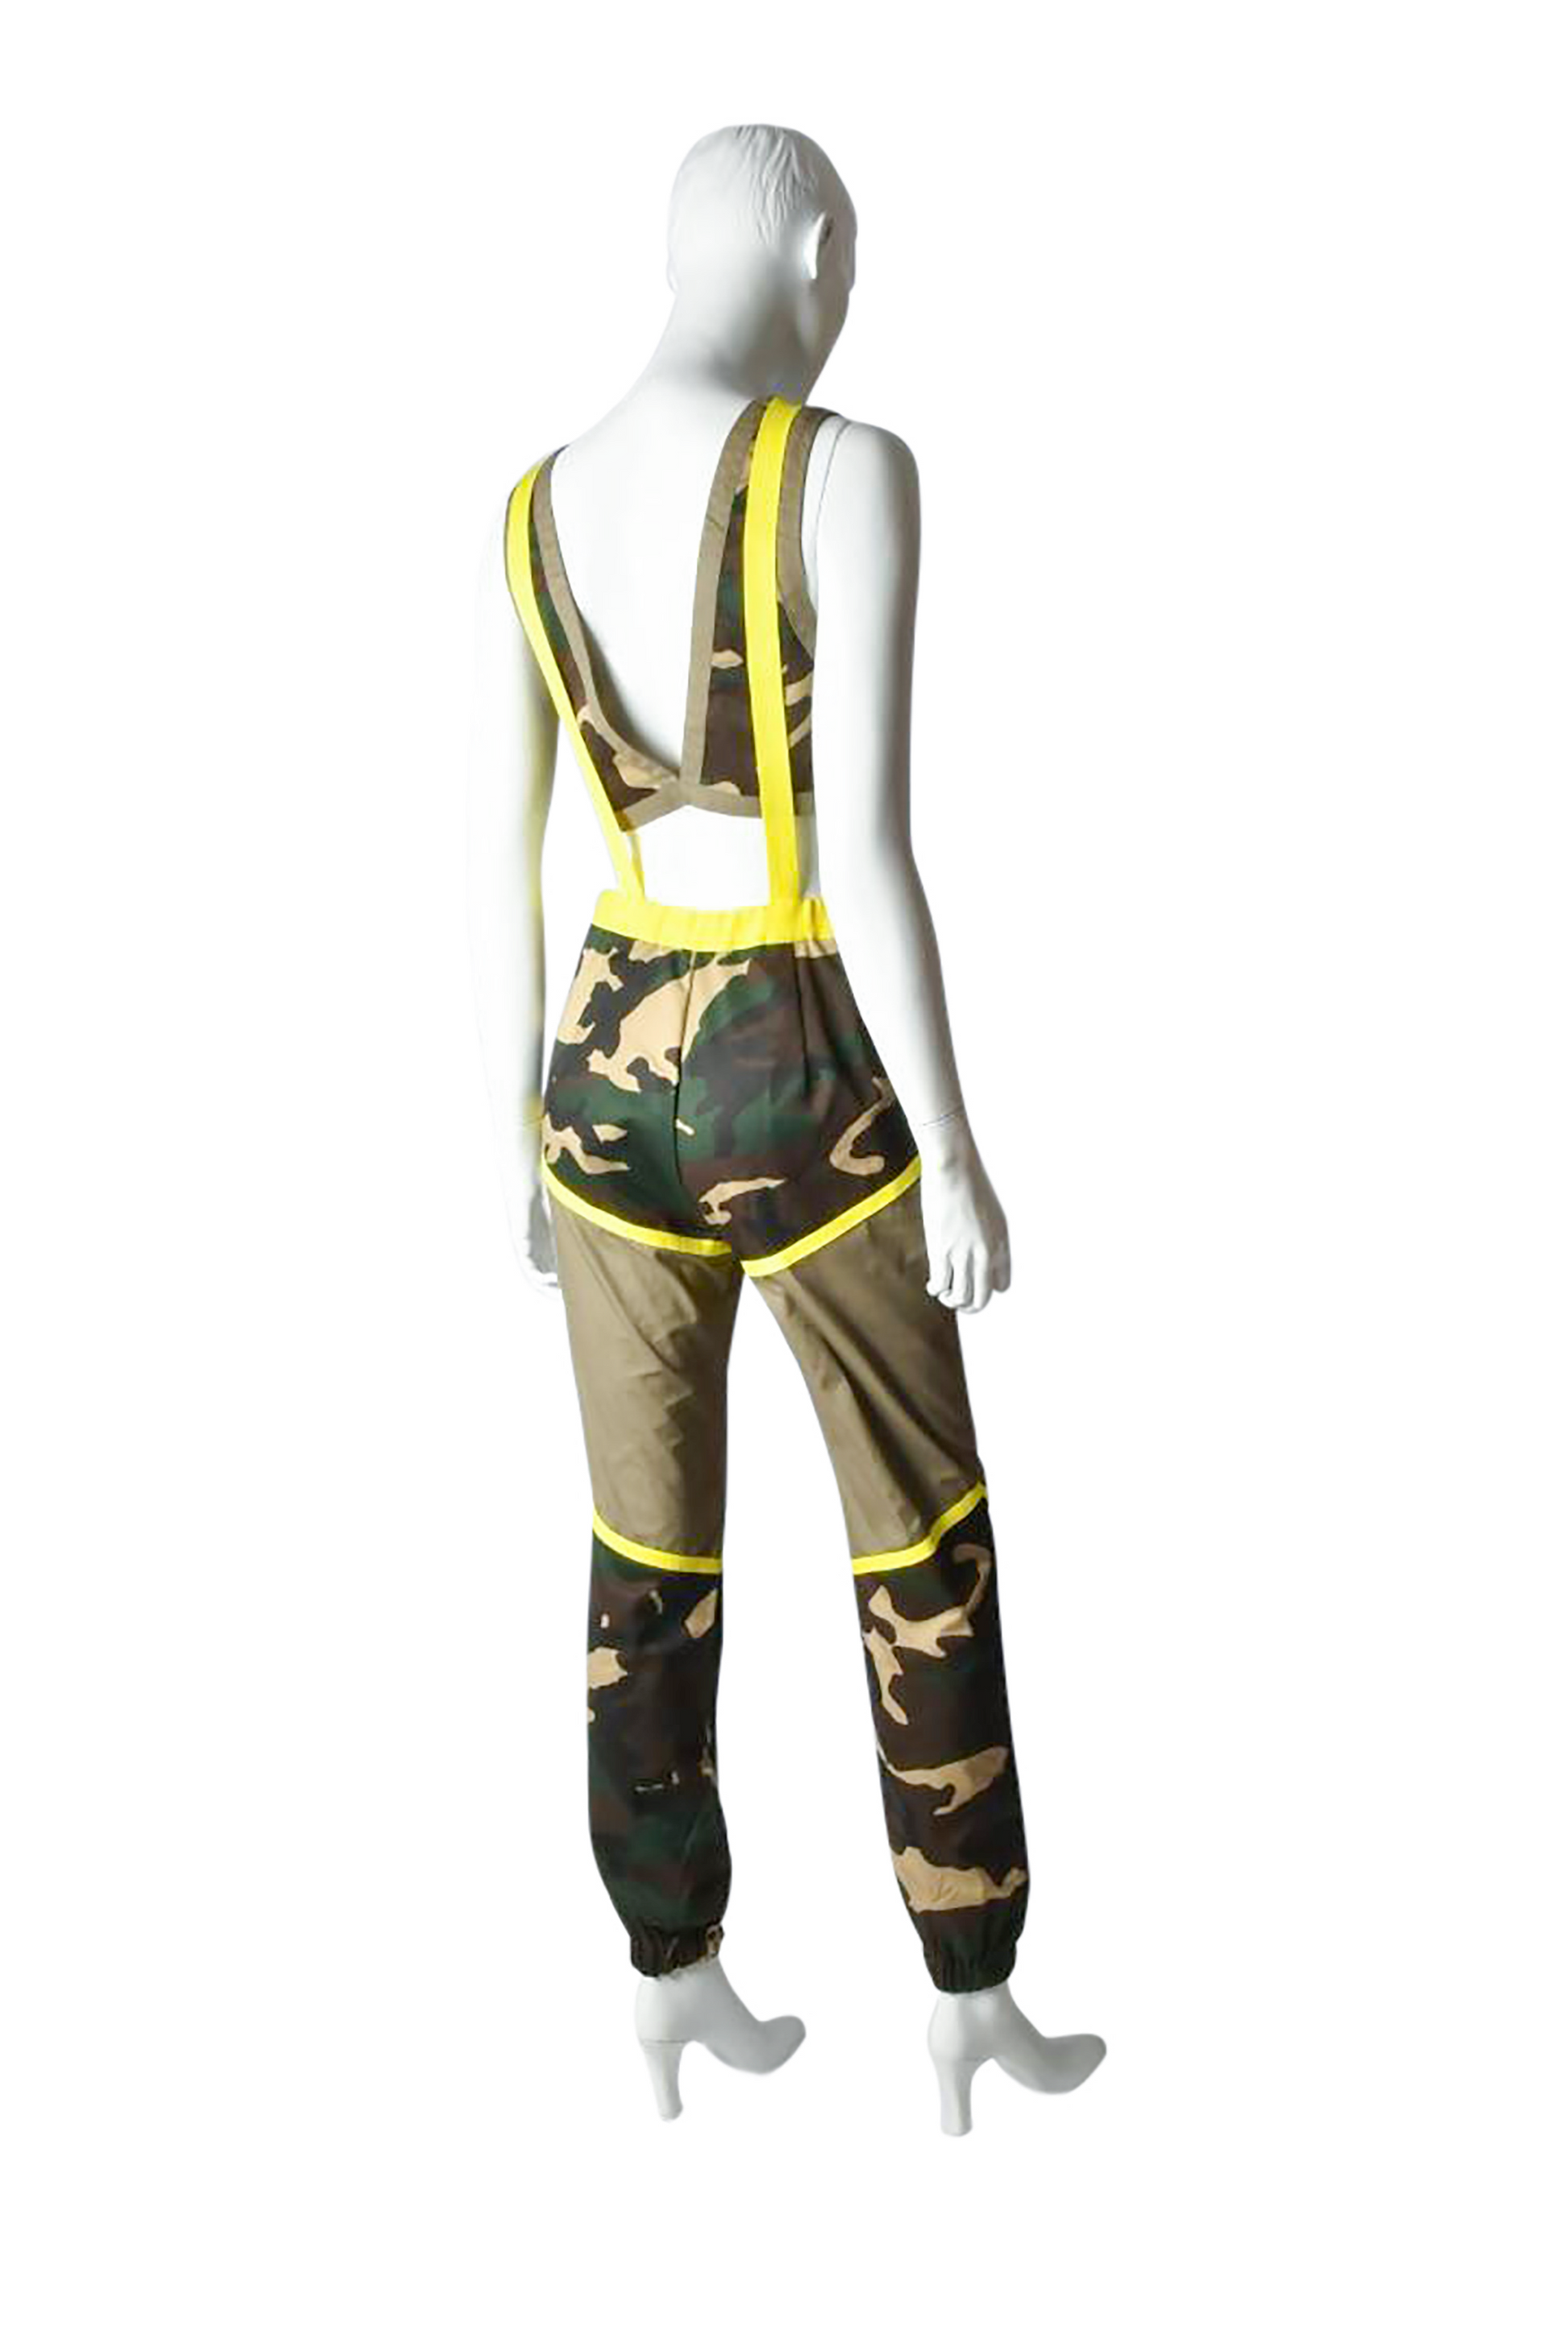 Camo Print Jumpsuit  With Neon Yellow Zip Front Top, Spandex Belt and Elastic Pants Foot 